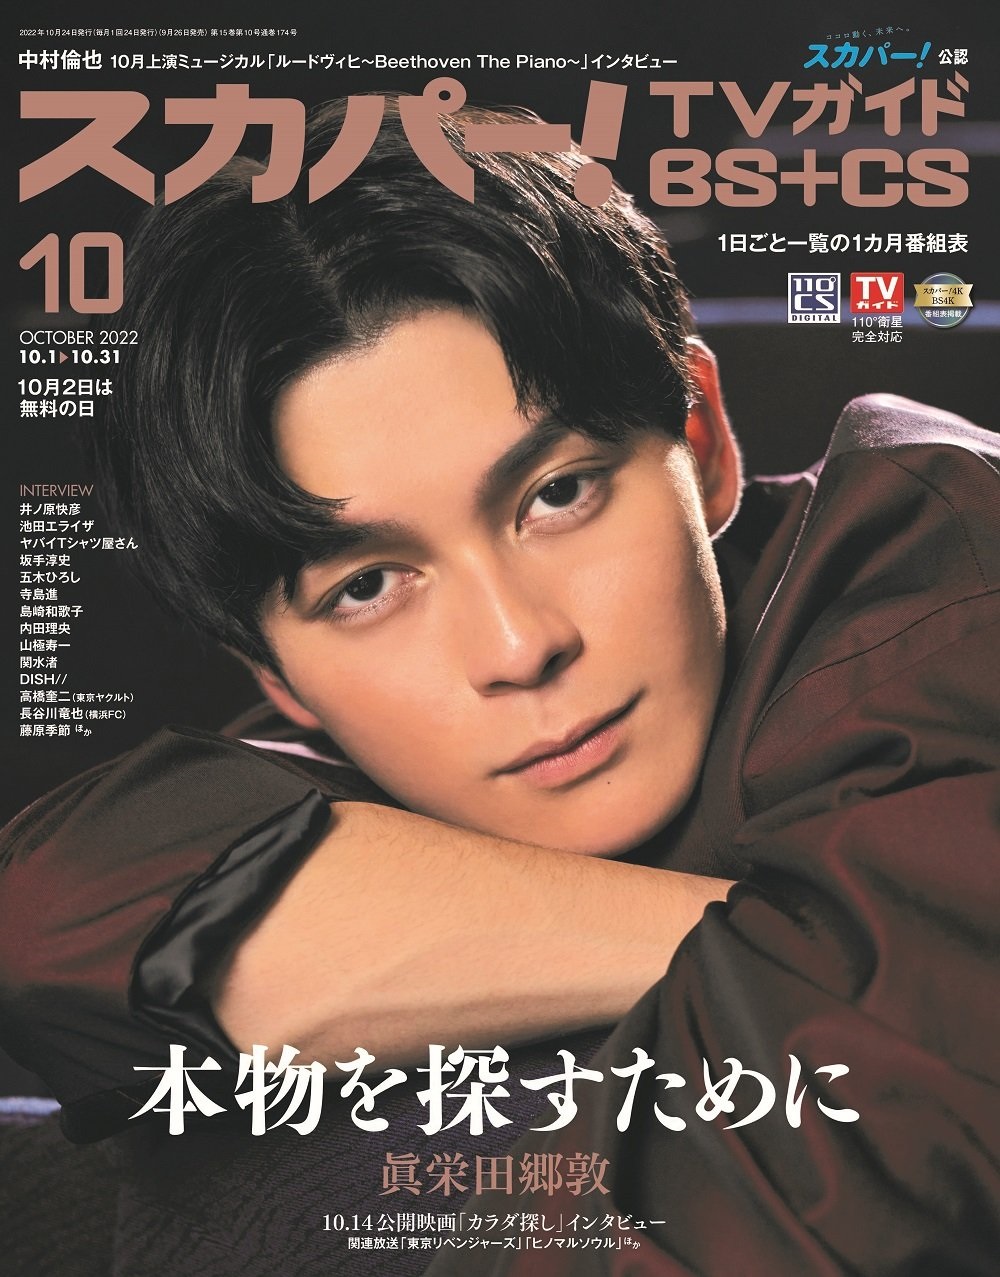 SKY PerfecTV！TV Guide BS＋CS 10...